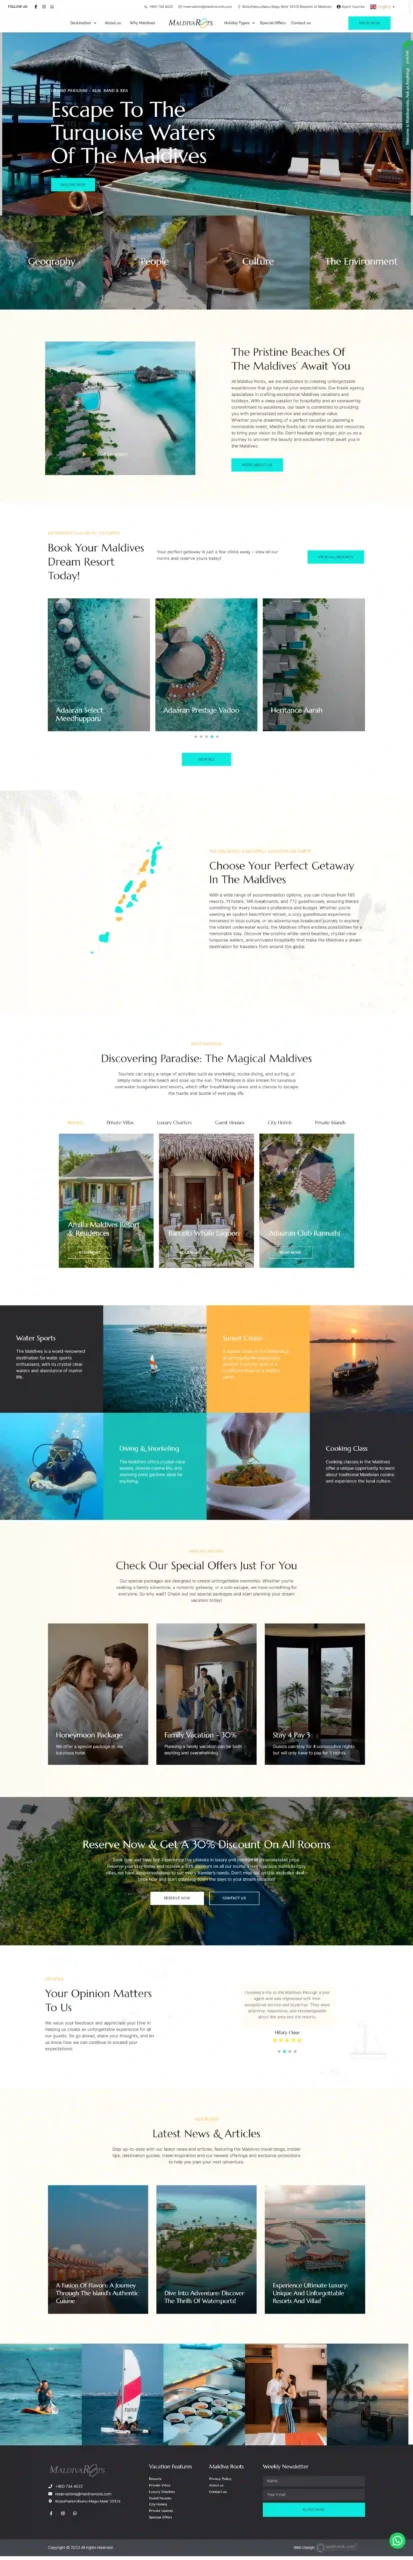 Maldiva Roots site web design by Weblook Web Design Sri Lanka